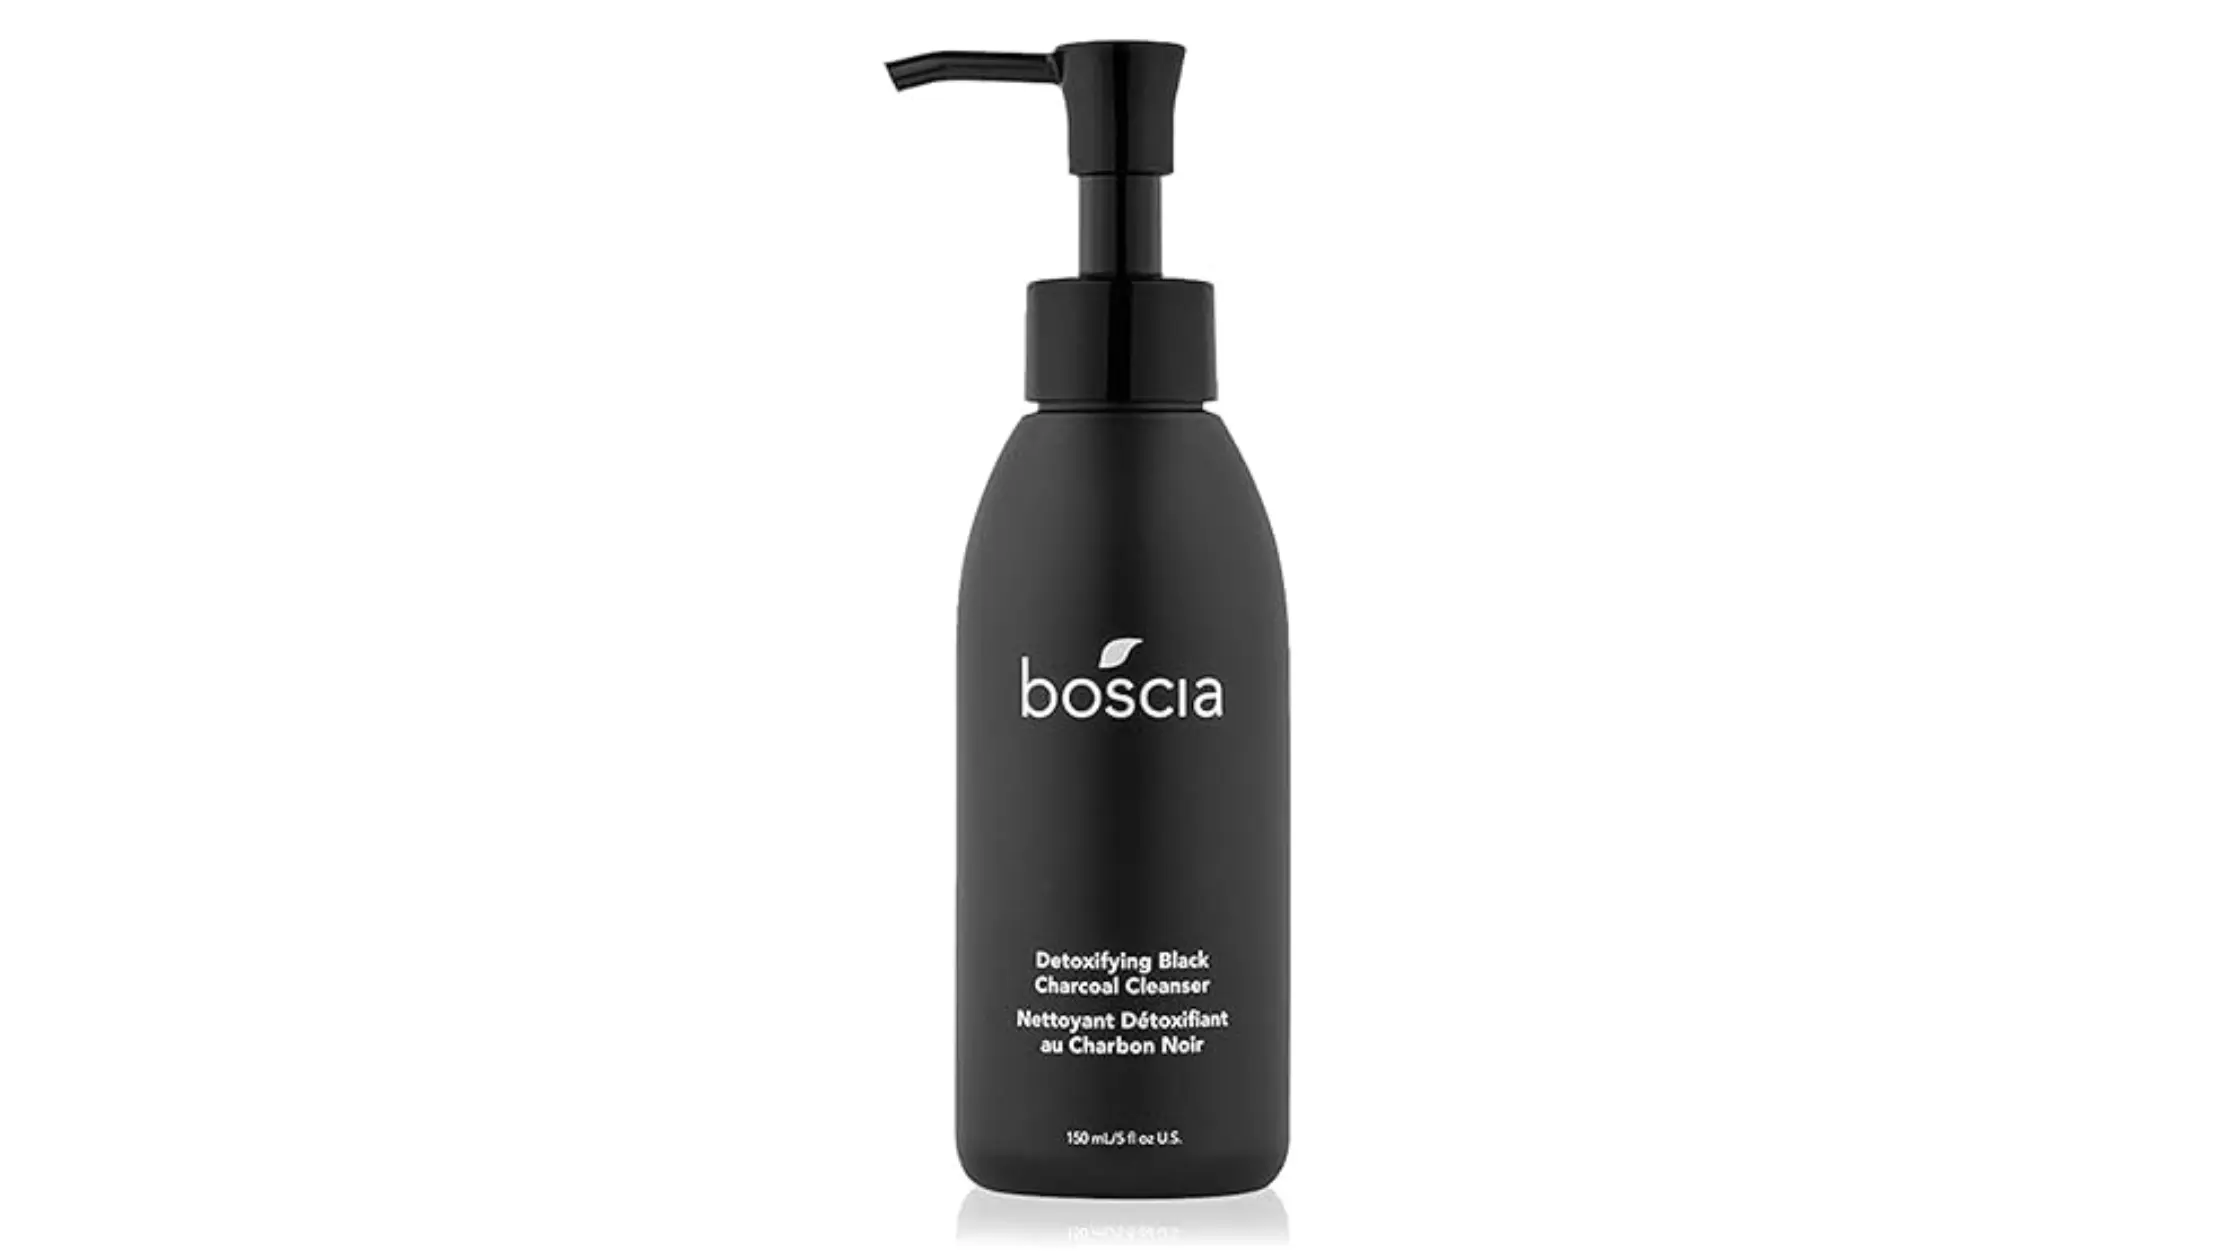 Boscia Detoxifying Black Charcoal Cleanser  Review